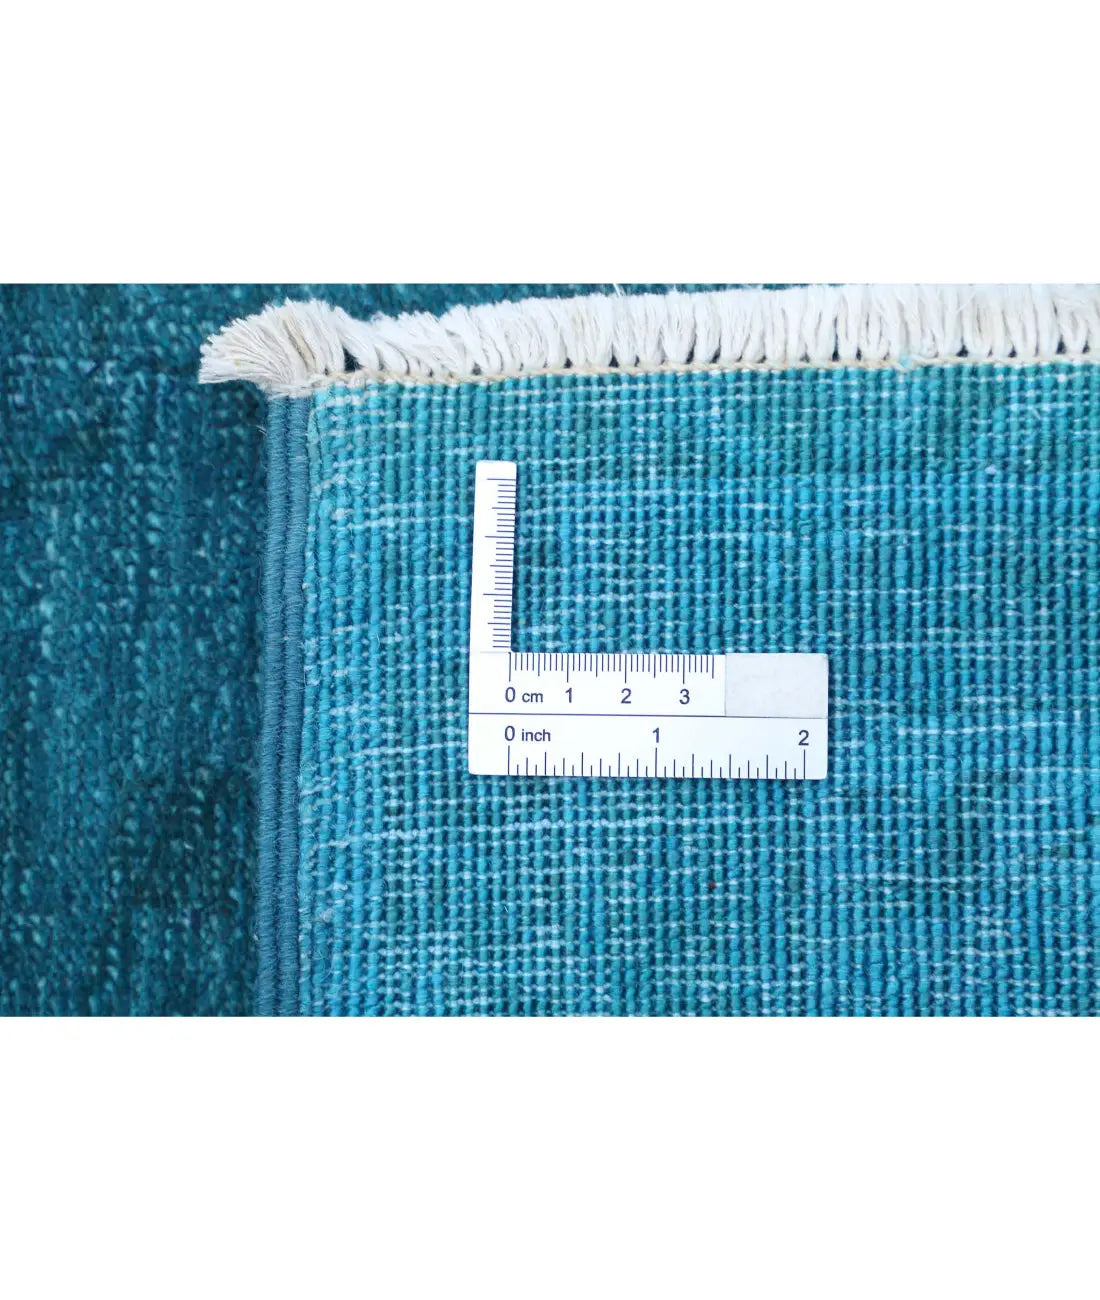 Hand Knotted Overdye Wool Rug - 5'5'' x 7'6'' - Arteverk Rugs Area rug